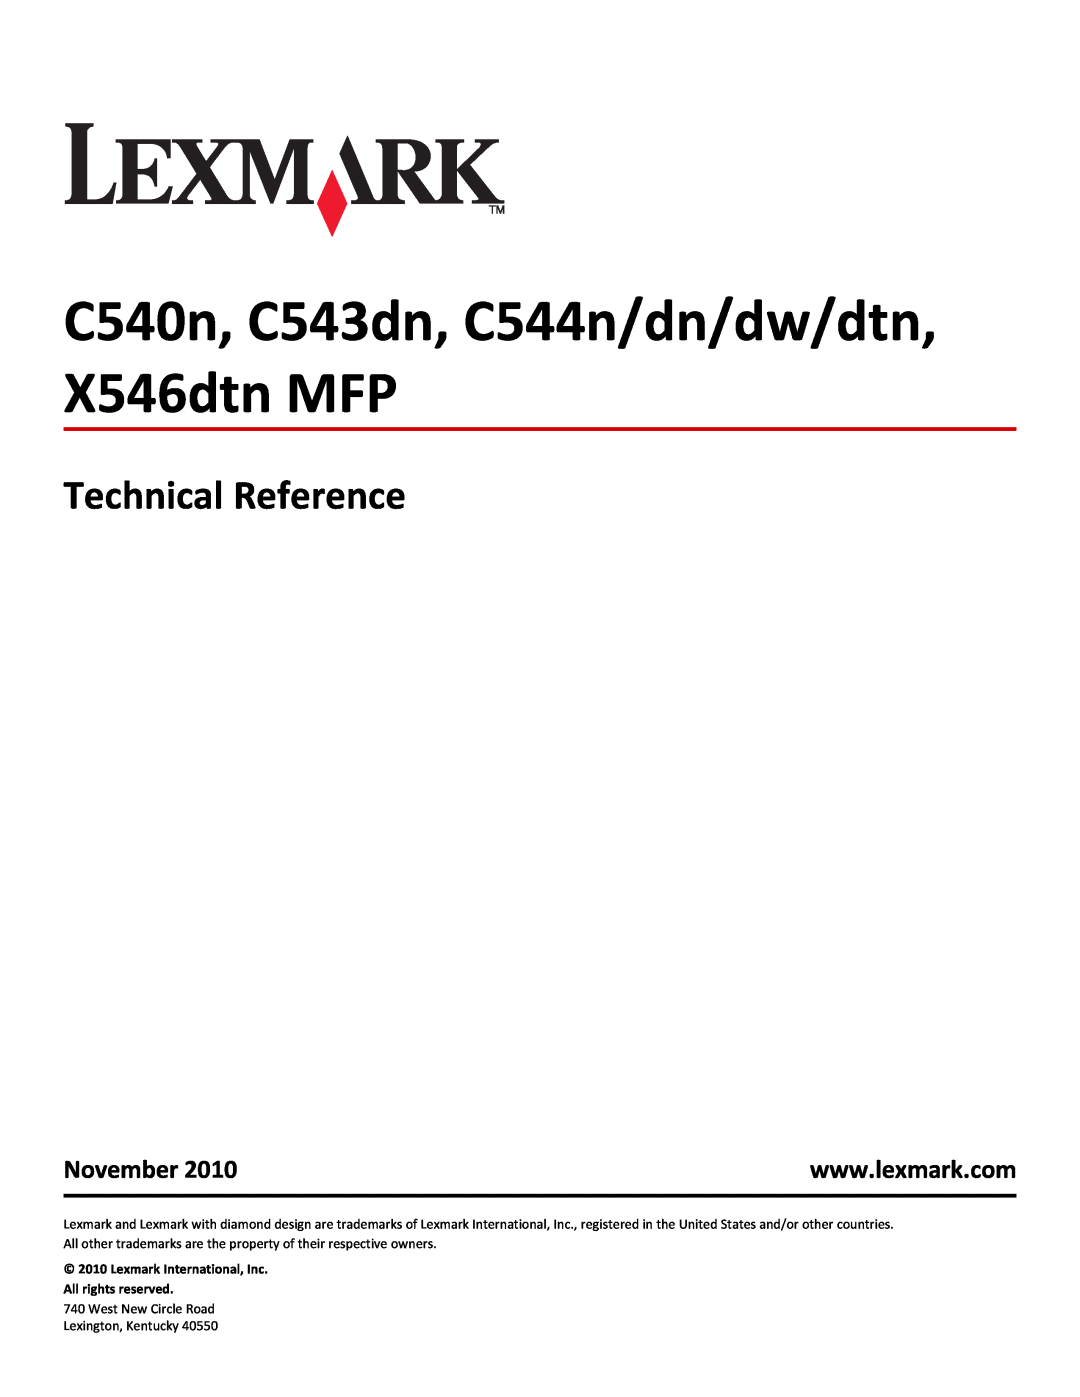 Lexmark X546DTN MFP, C544N/DN/DW/DTN manual Technical Reference, November, C540n, C543dn, C544n/dn/dw/dtn, X546dtn MFP 